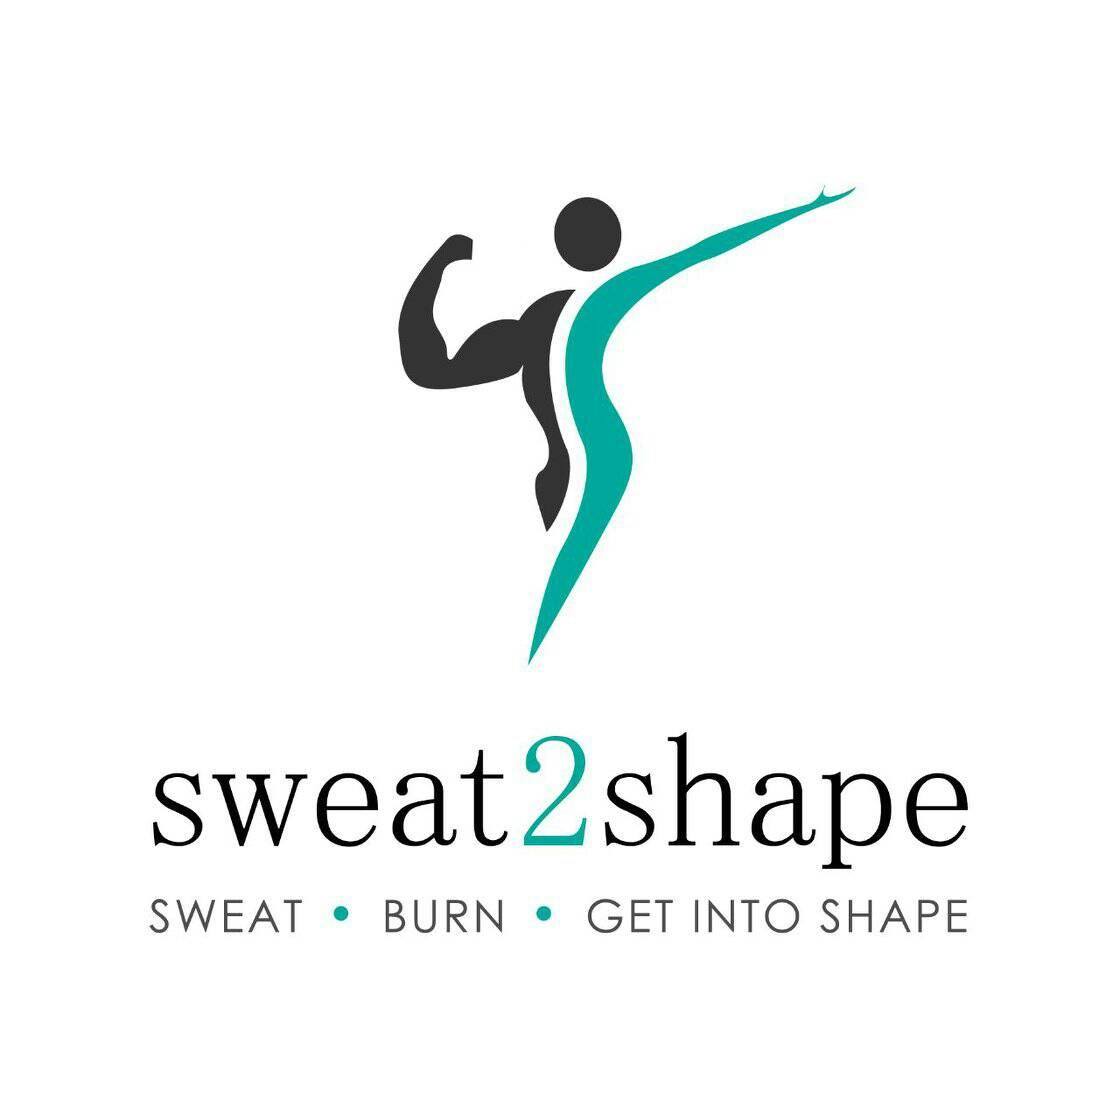 Sweat2shape Gym|Salon|Active Life